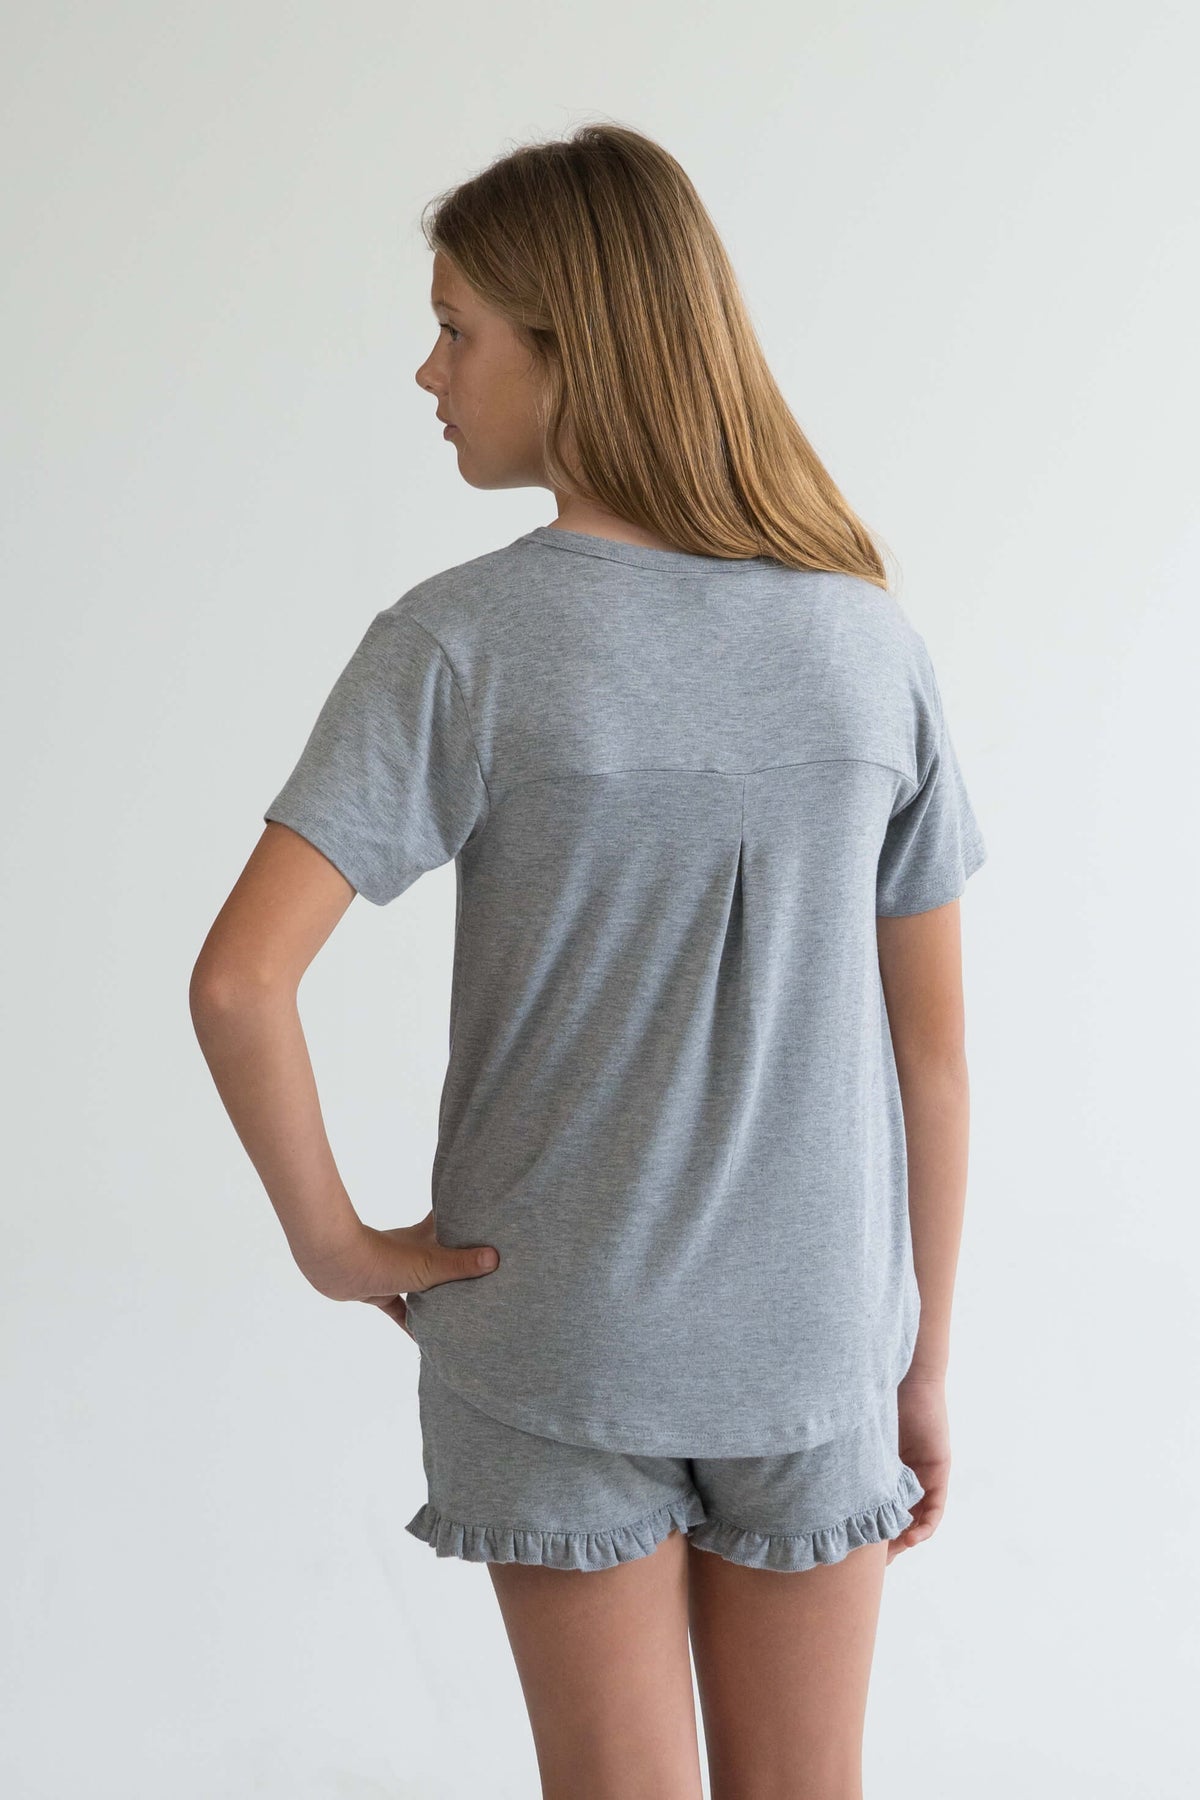 grey teen girls summer pyjamas set shorts with pockets and frill and short sleeve top by Love Haidee Australia back